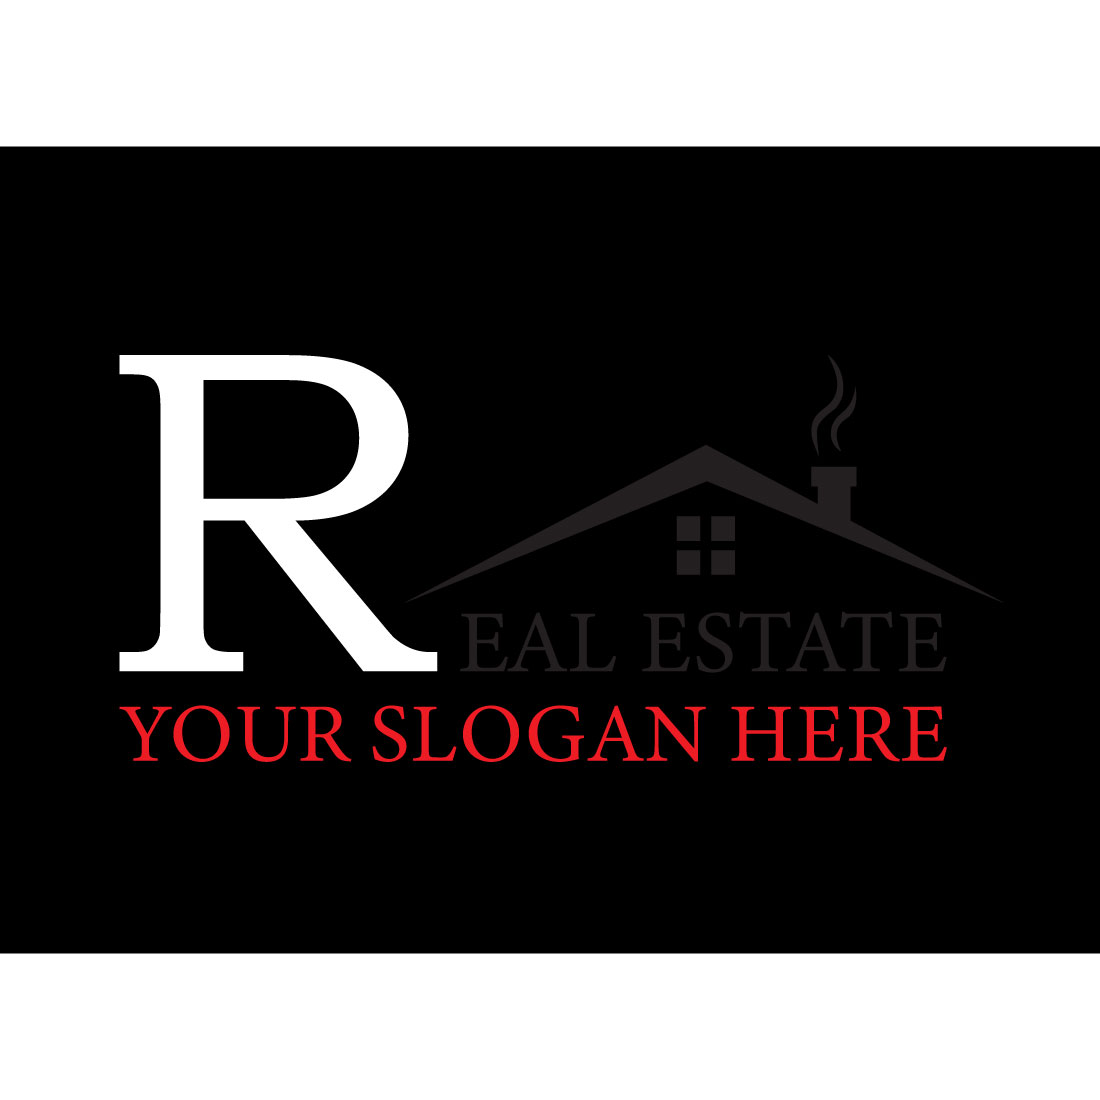 Real estate logo preview image.